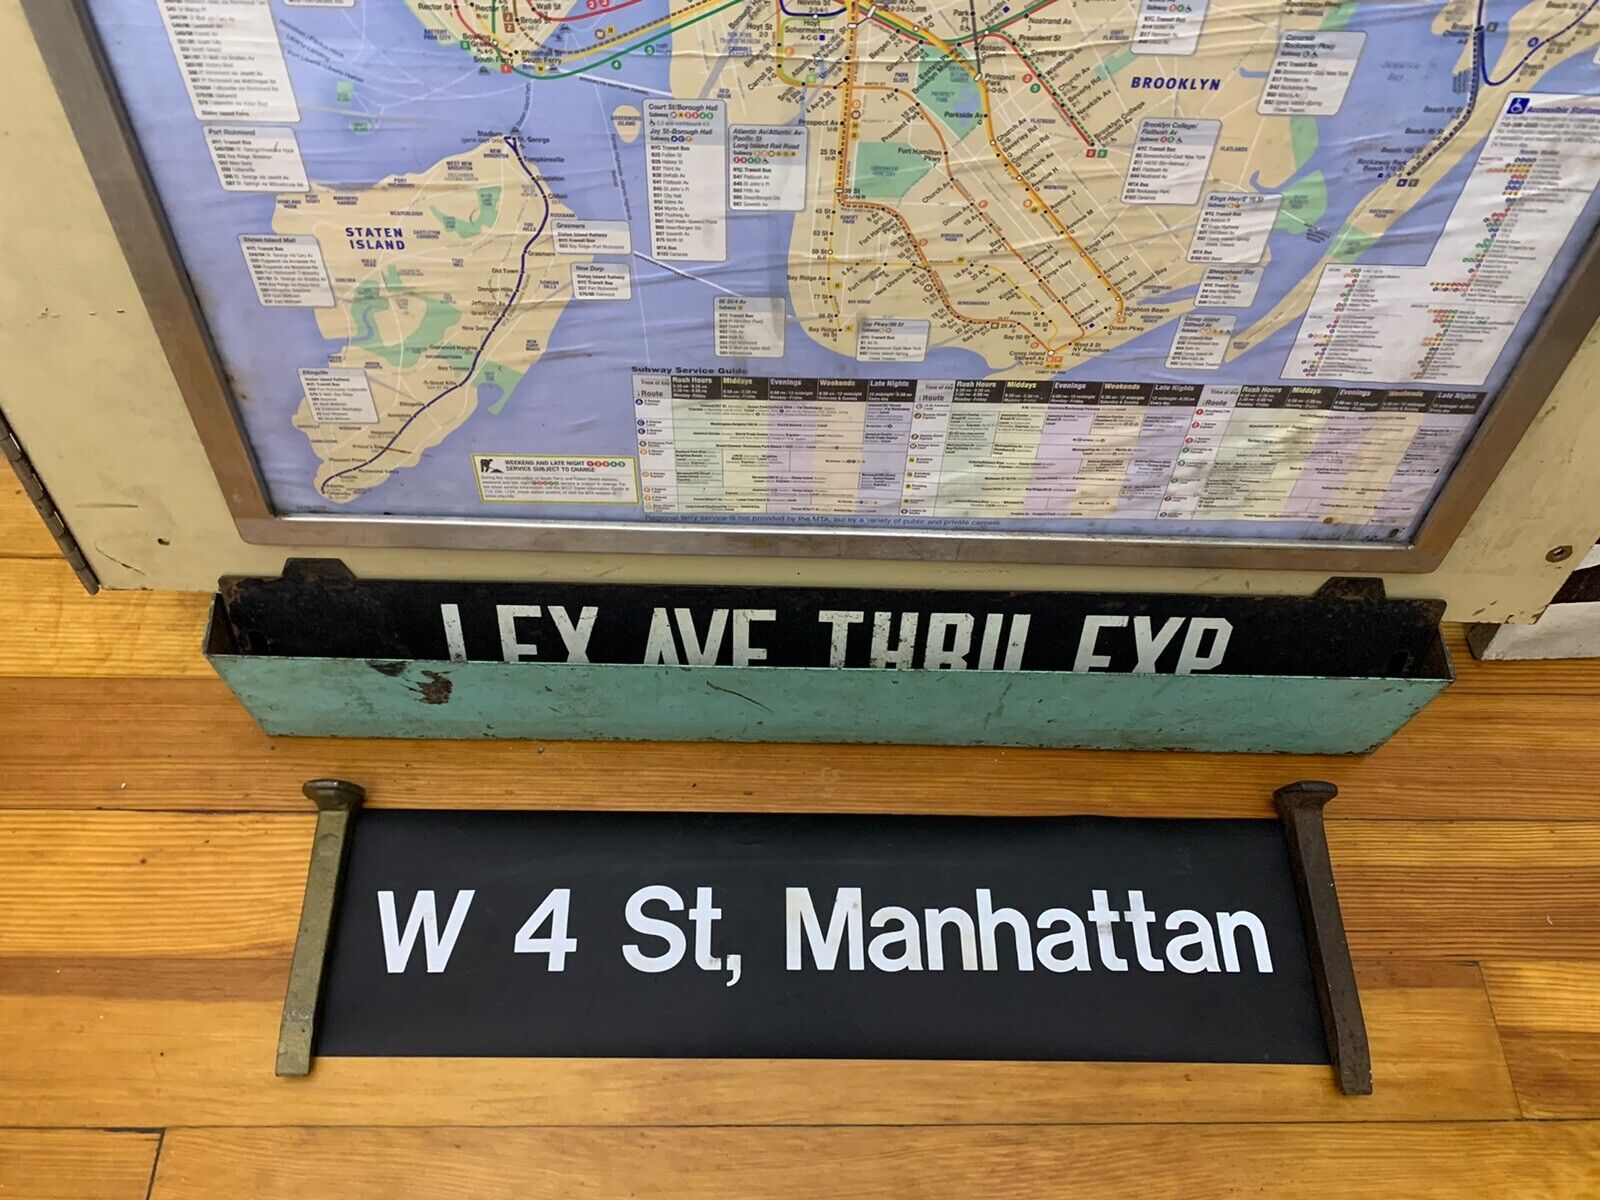 NY NYC SUBWAY ROLL SIGN WEST 4 STREET MANHATTAN WASHINGTON SQUARE BROADWAY ART